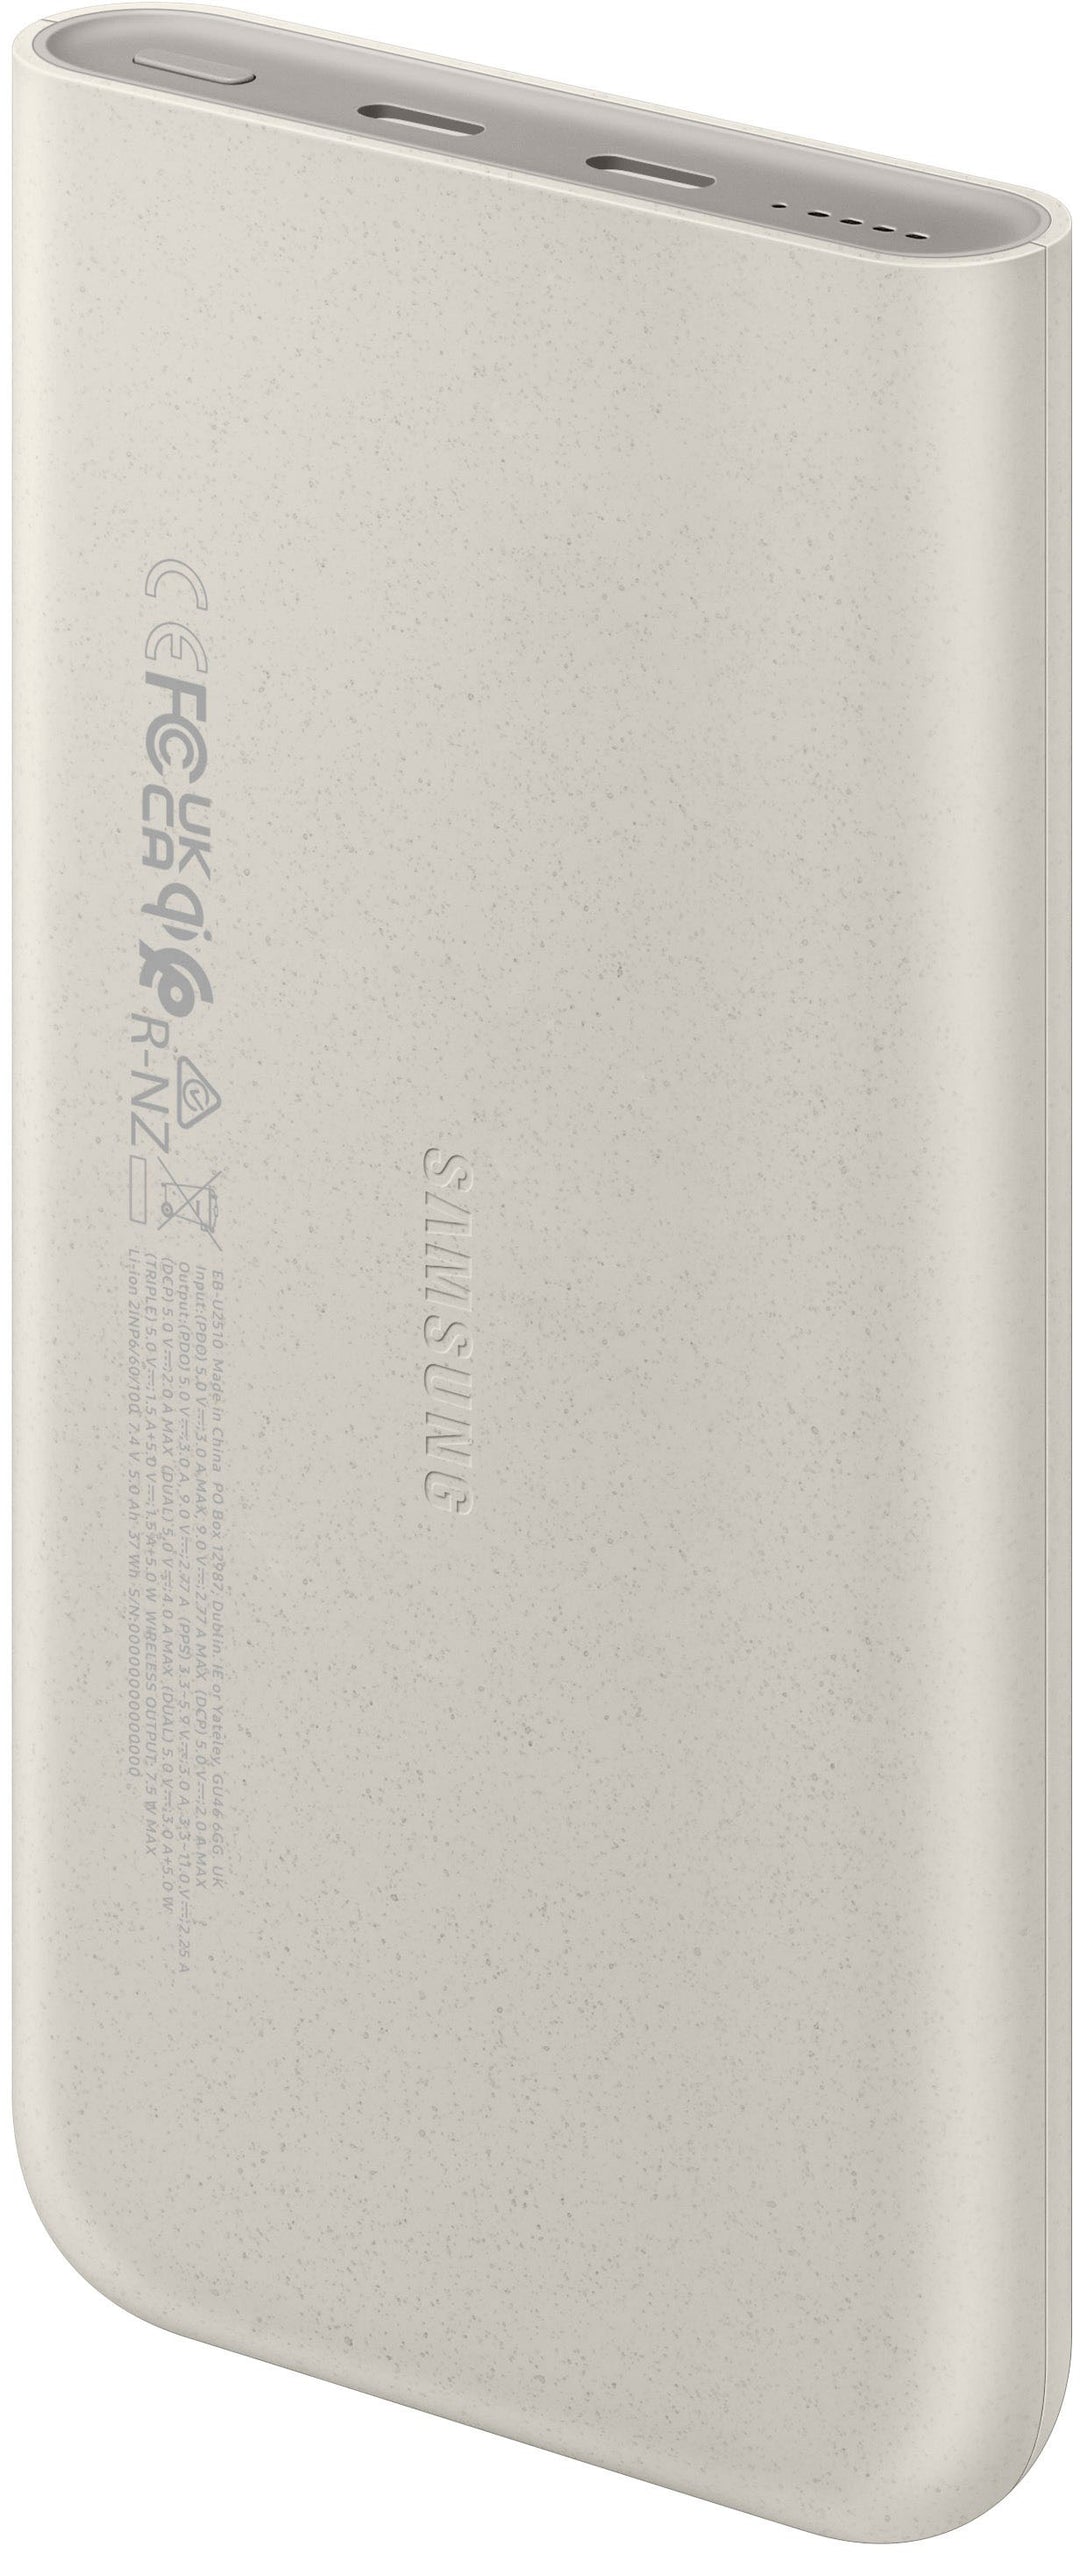 Samsung - 25W 10,000mAh Wireless Battery Pack - Beige_5